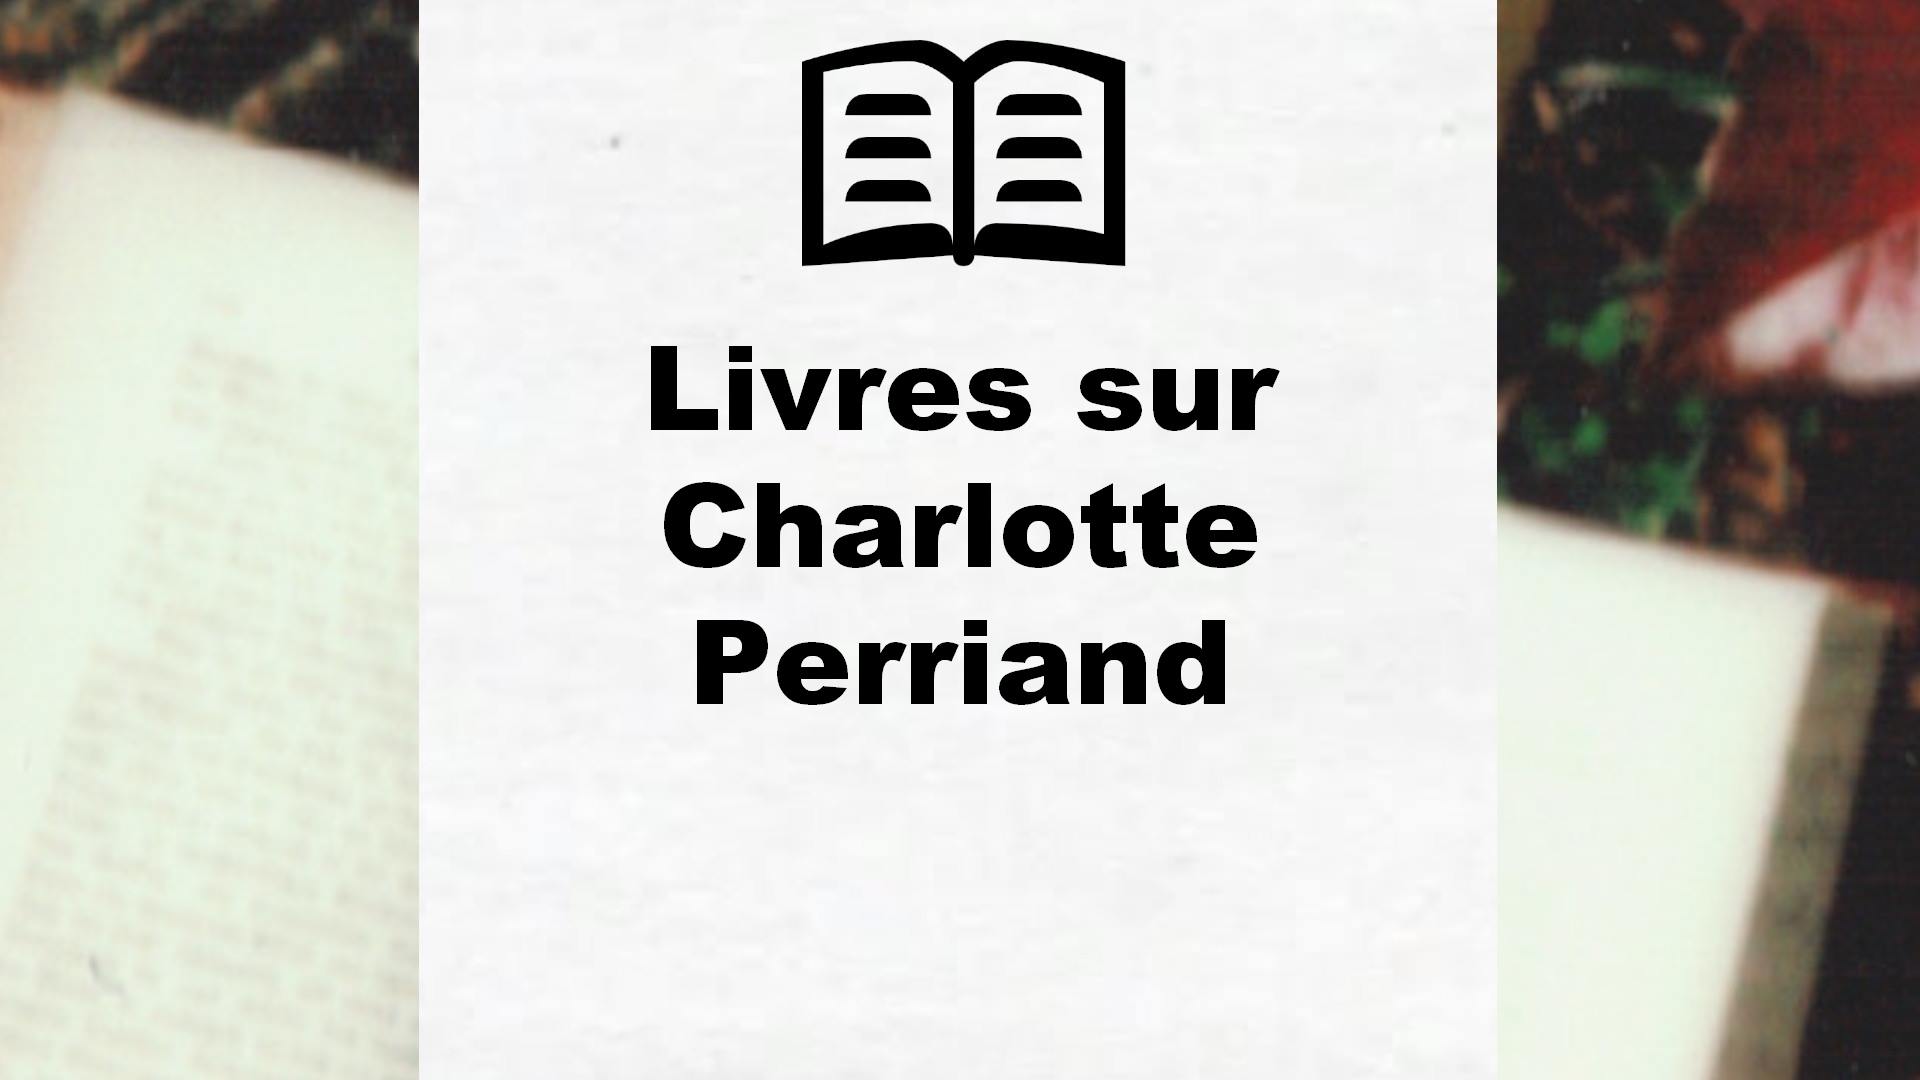 Livres sur Charlotte Perriand